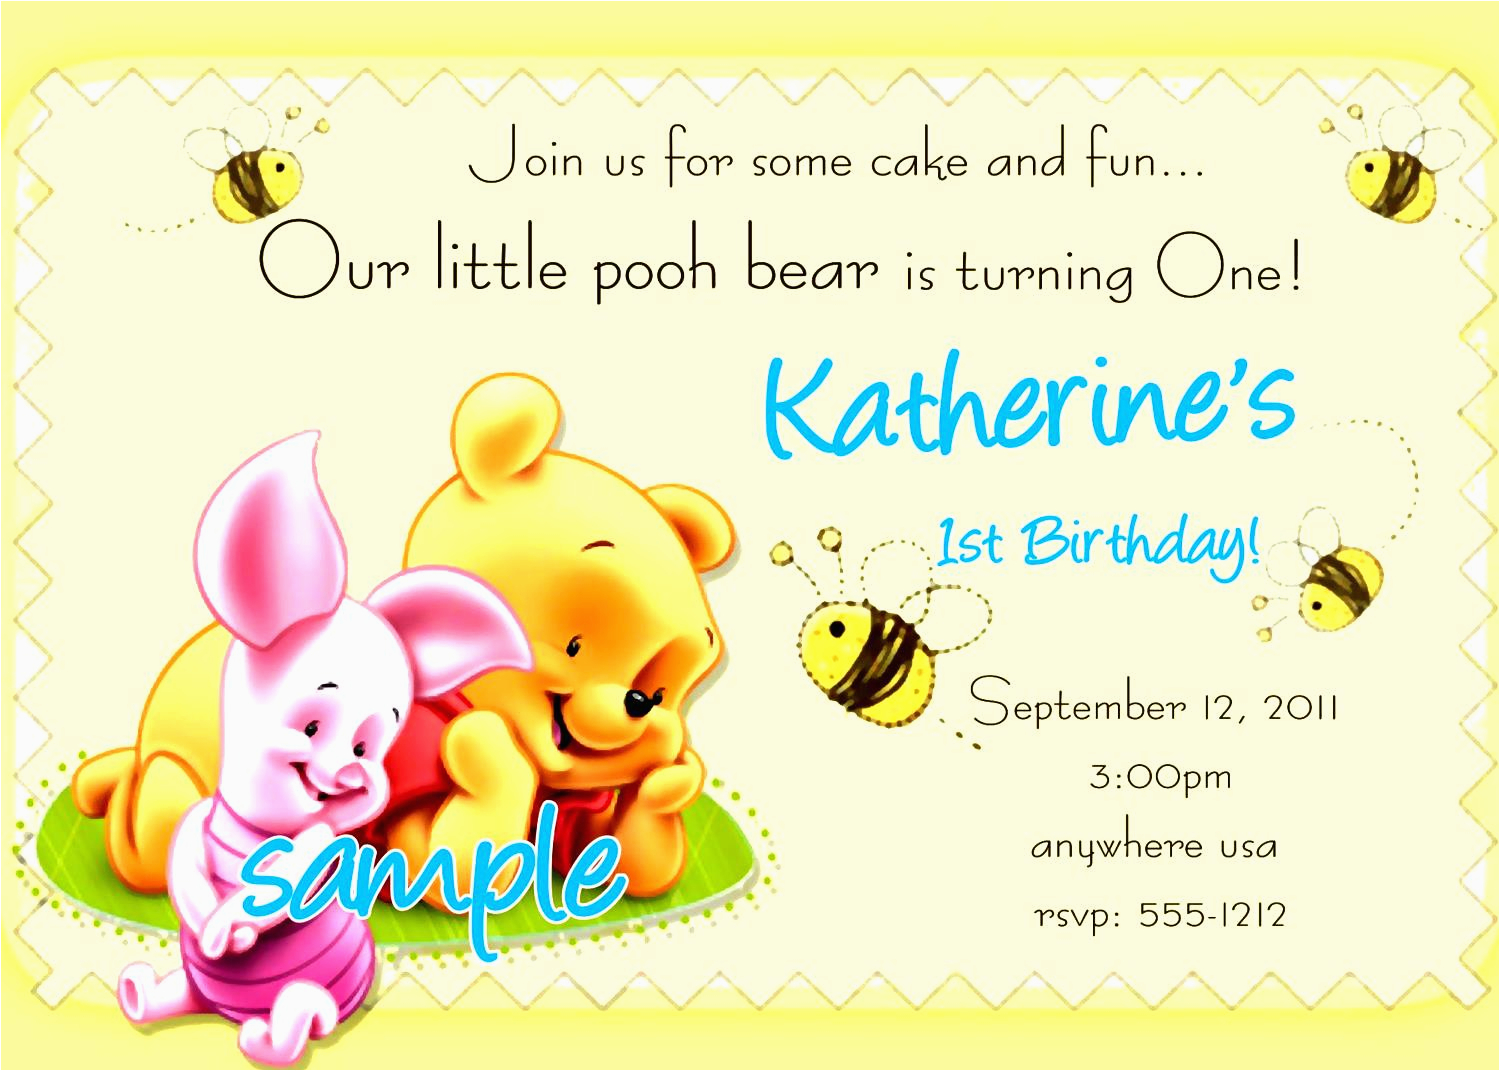 21 kids birthday invitation wording that we can make